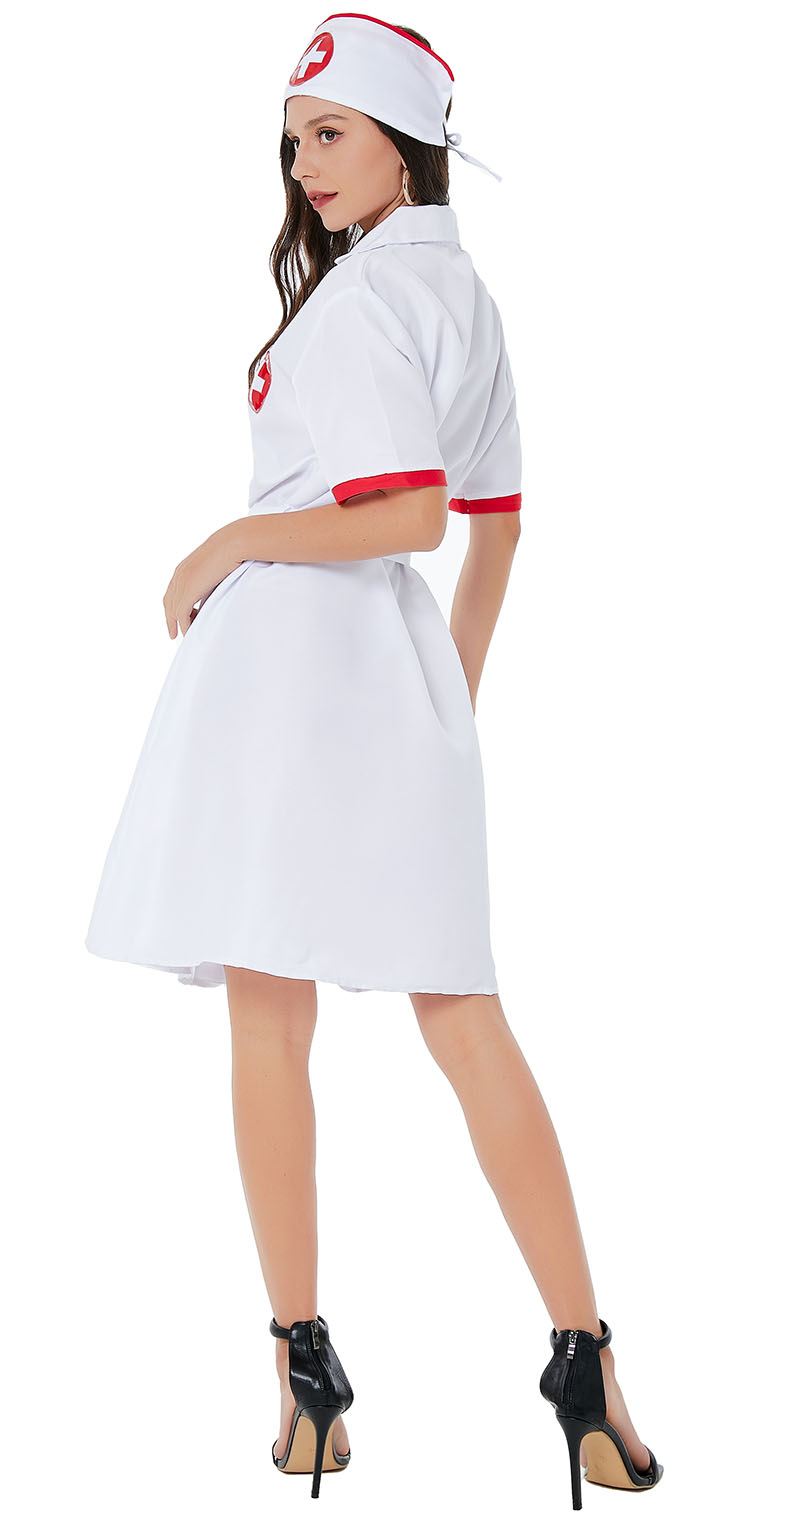 Flirty Nurse Costume